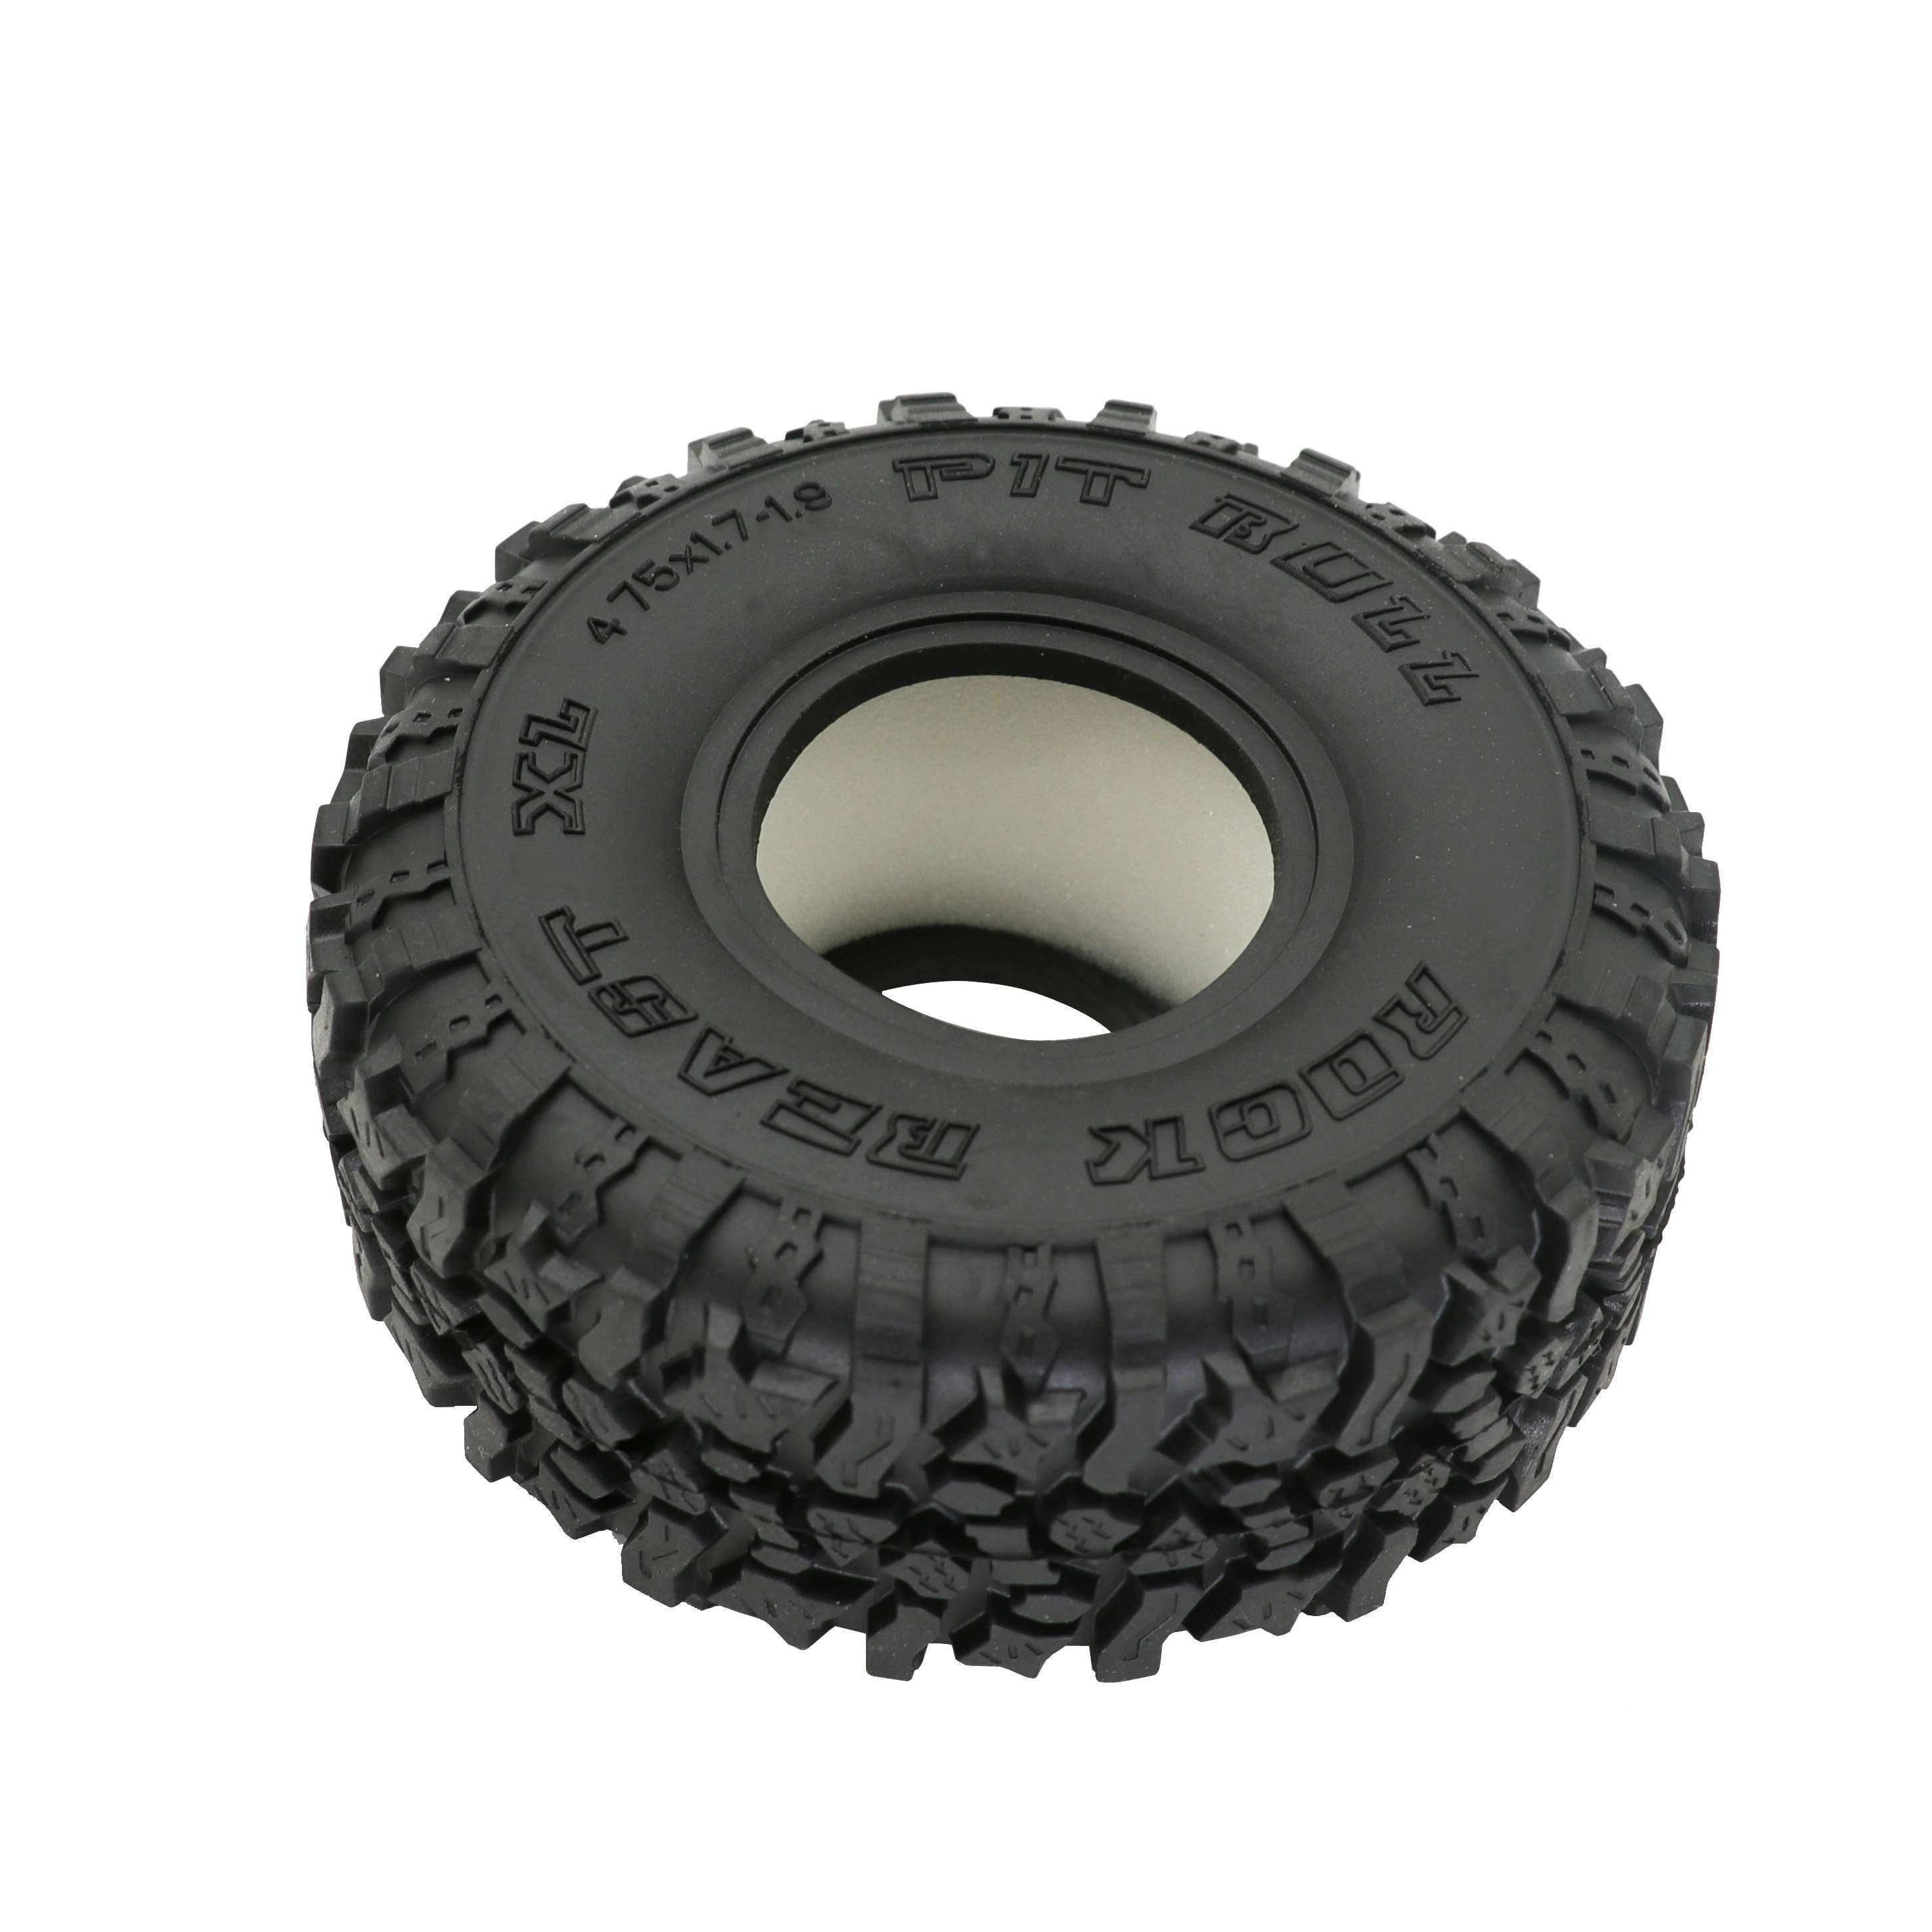 Fltaheroo 4PCS 120MM 1.9 Rubber Rocks Tyres Wheel Tires for 1/10 RC Crawler Axial SCX10 90046 AXI03007 TRX4 D90 TF2